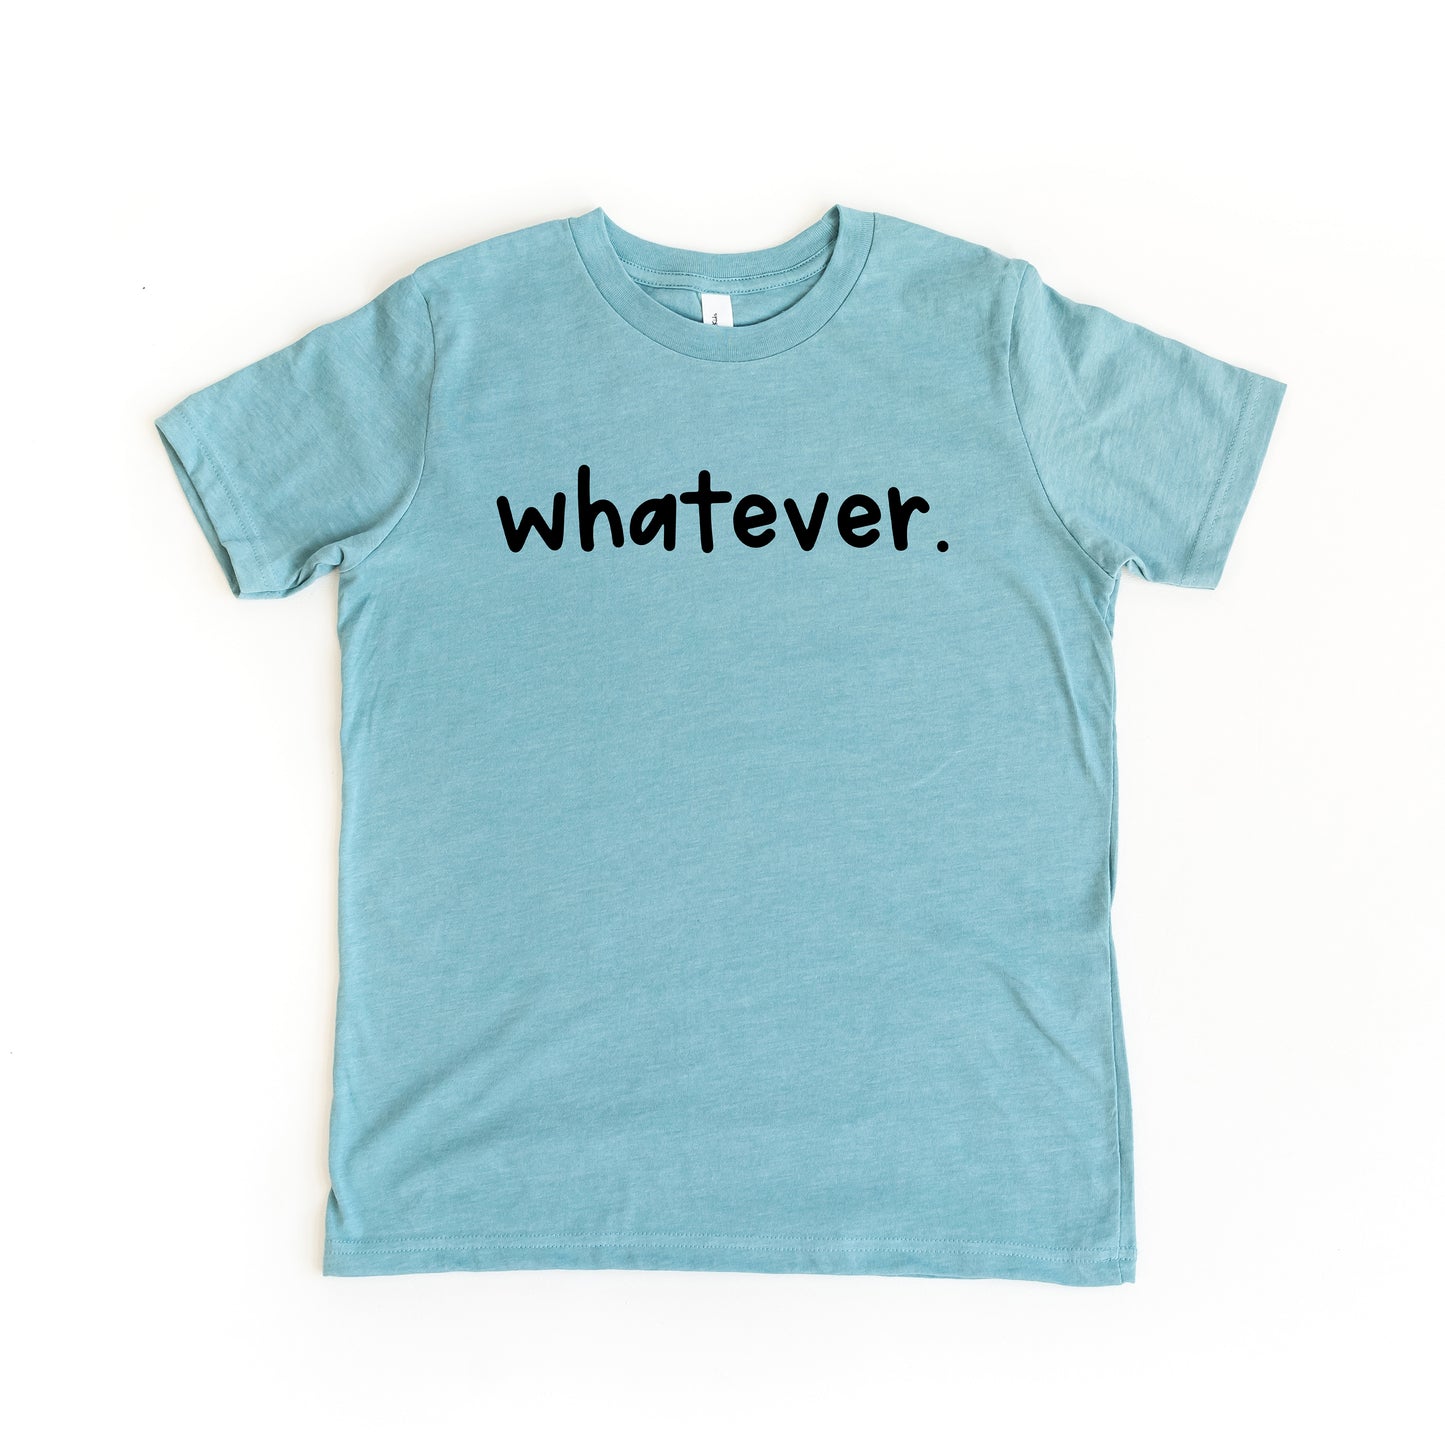 Whatever. Typewriter | Youth Short Sleeve Crew Neck